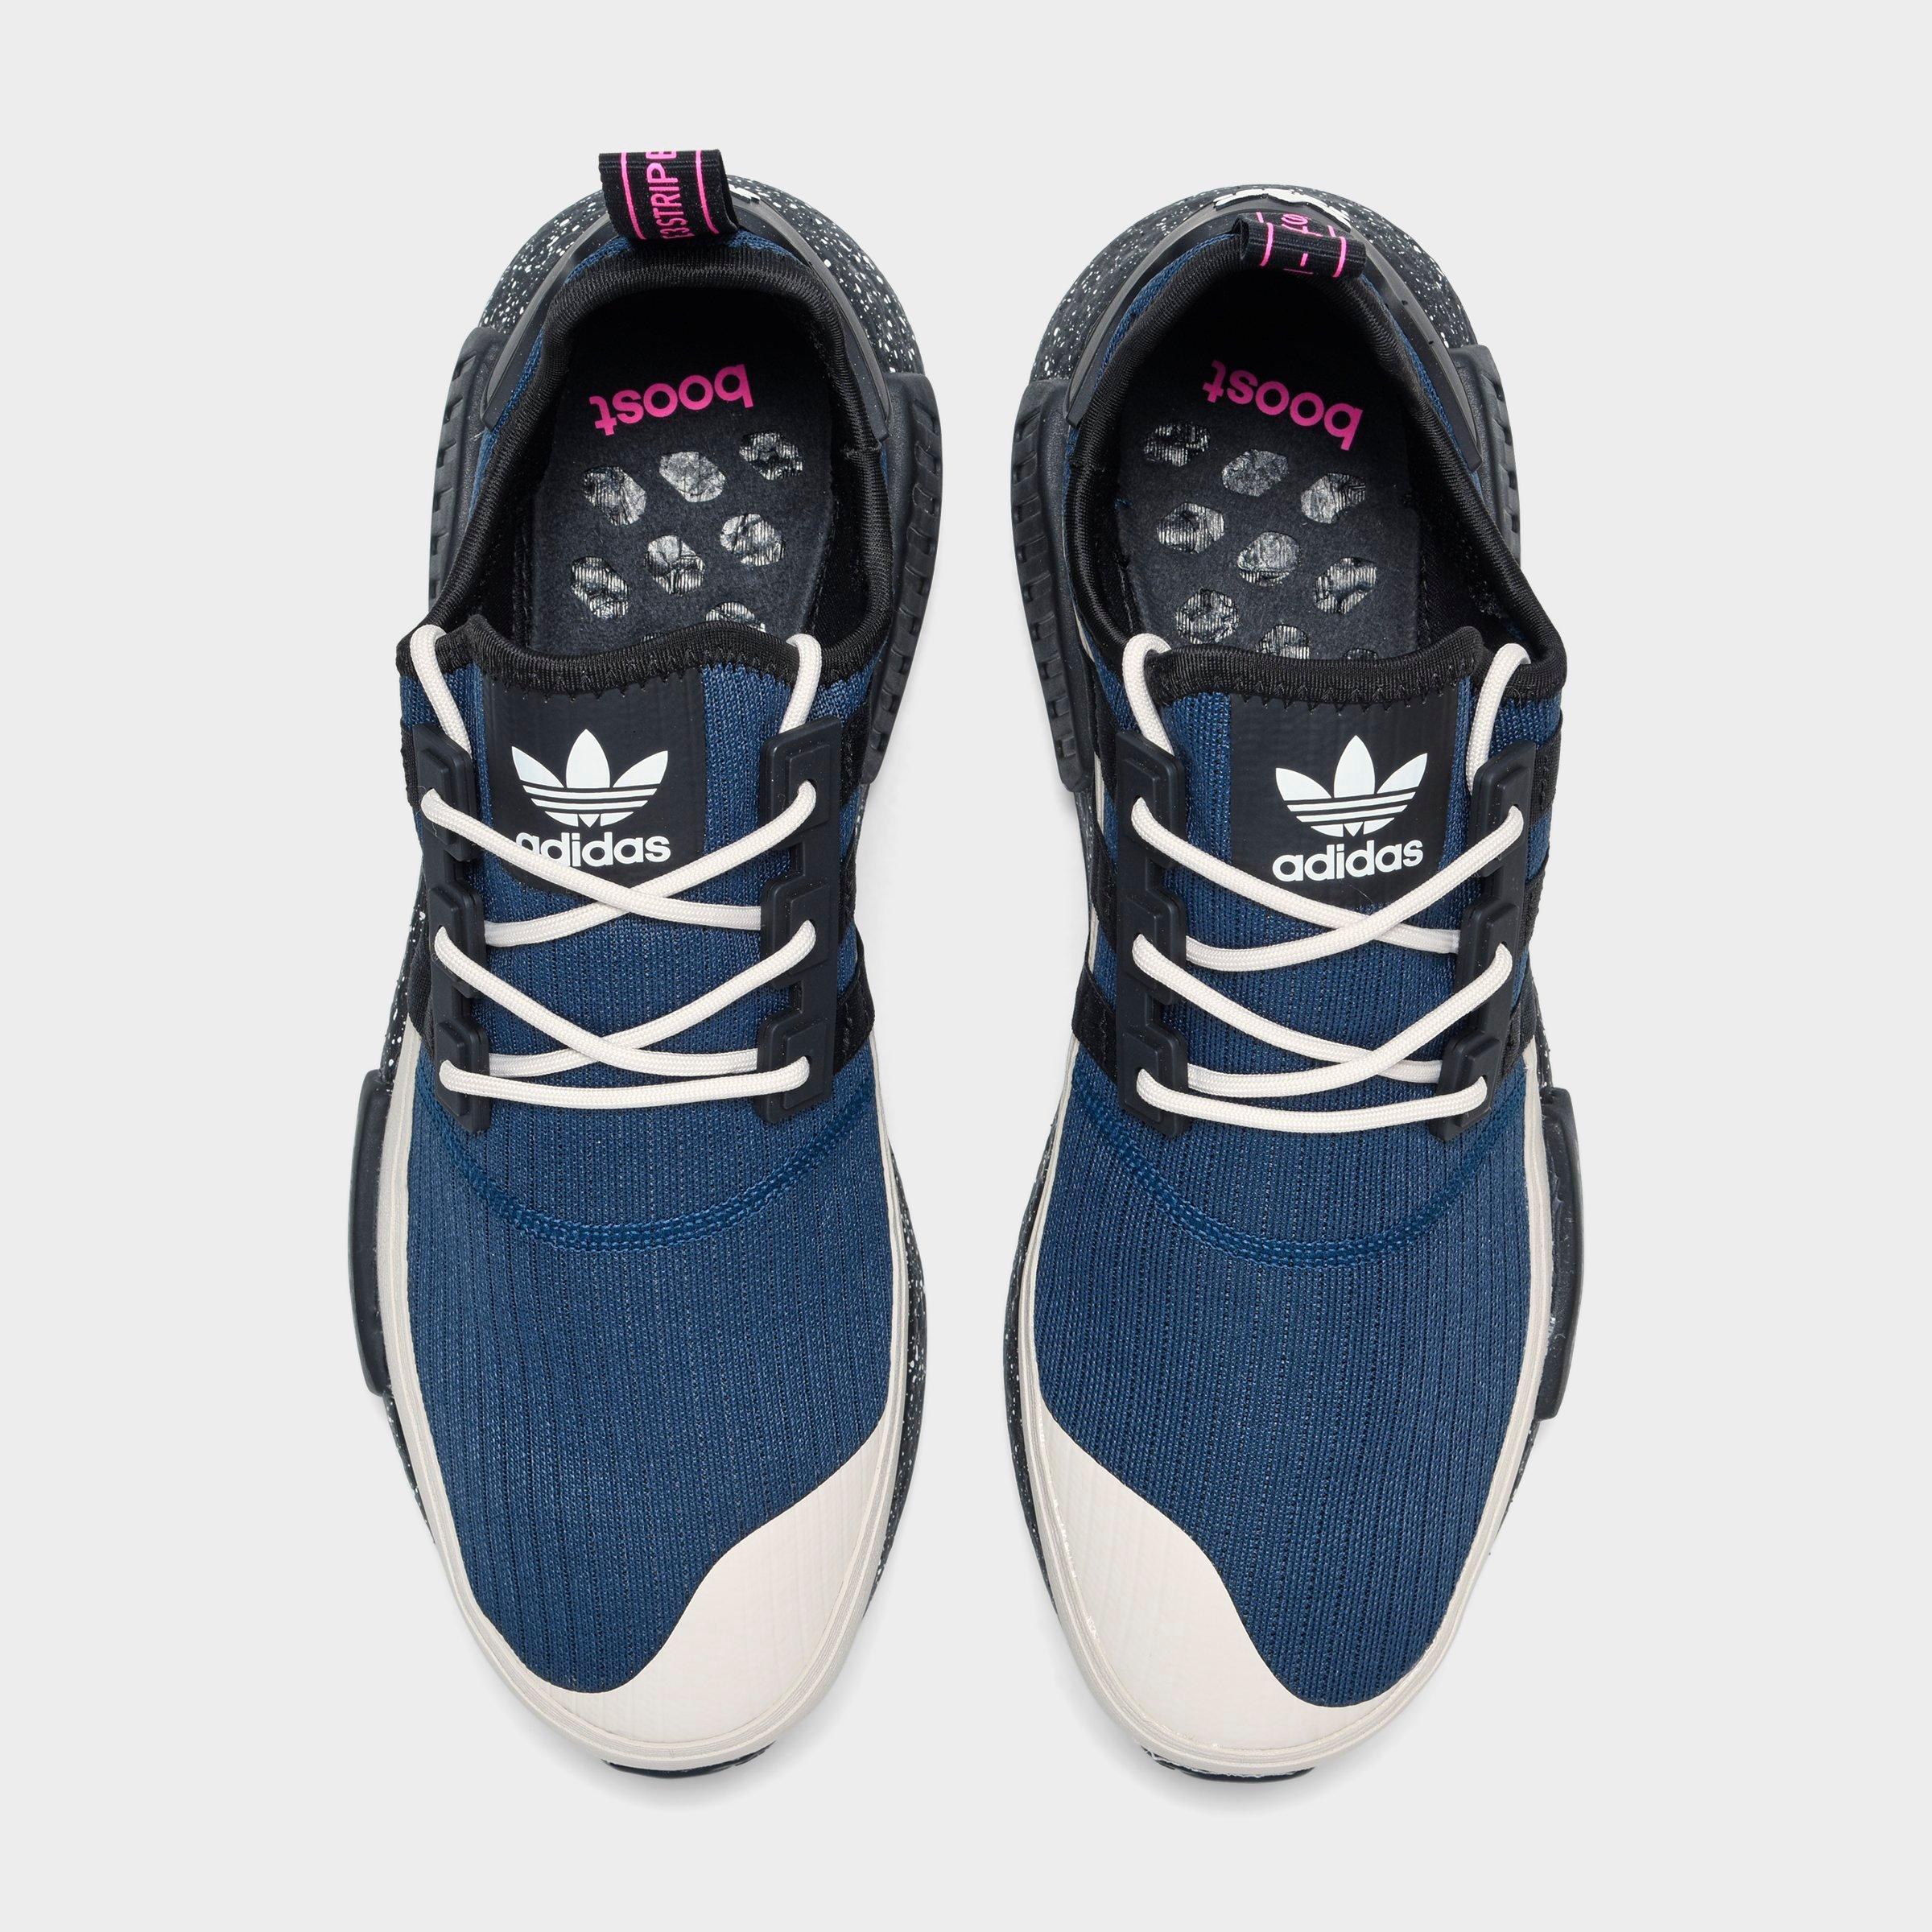 adidas originals men's nmd r1 running shoe